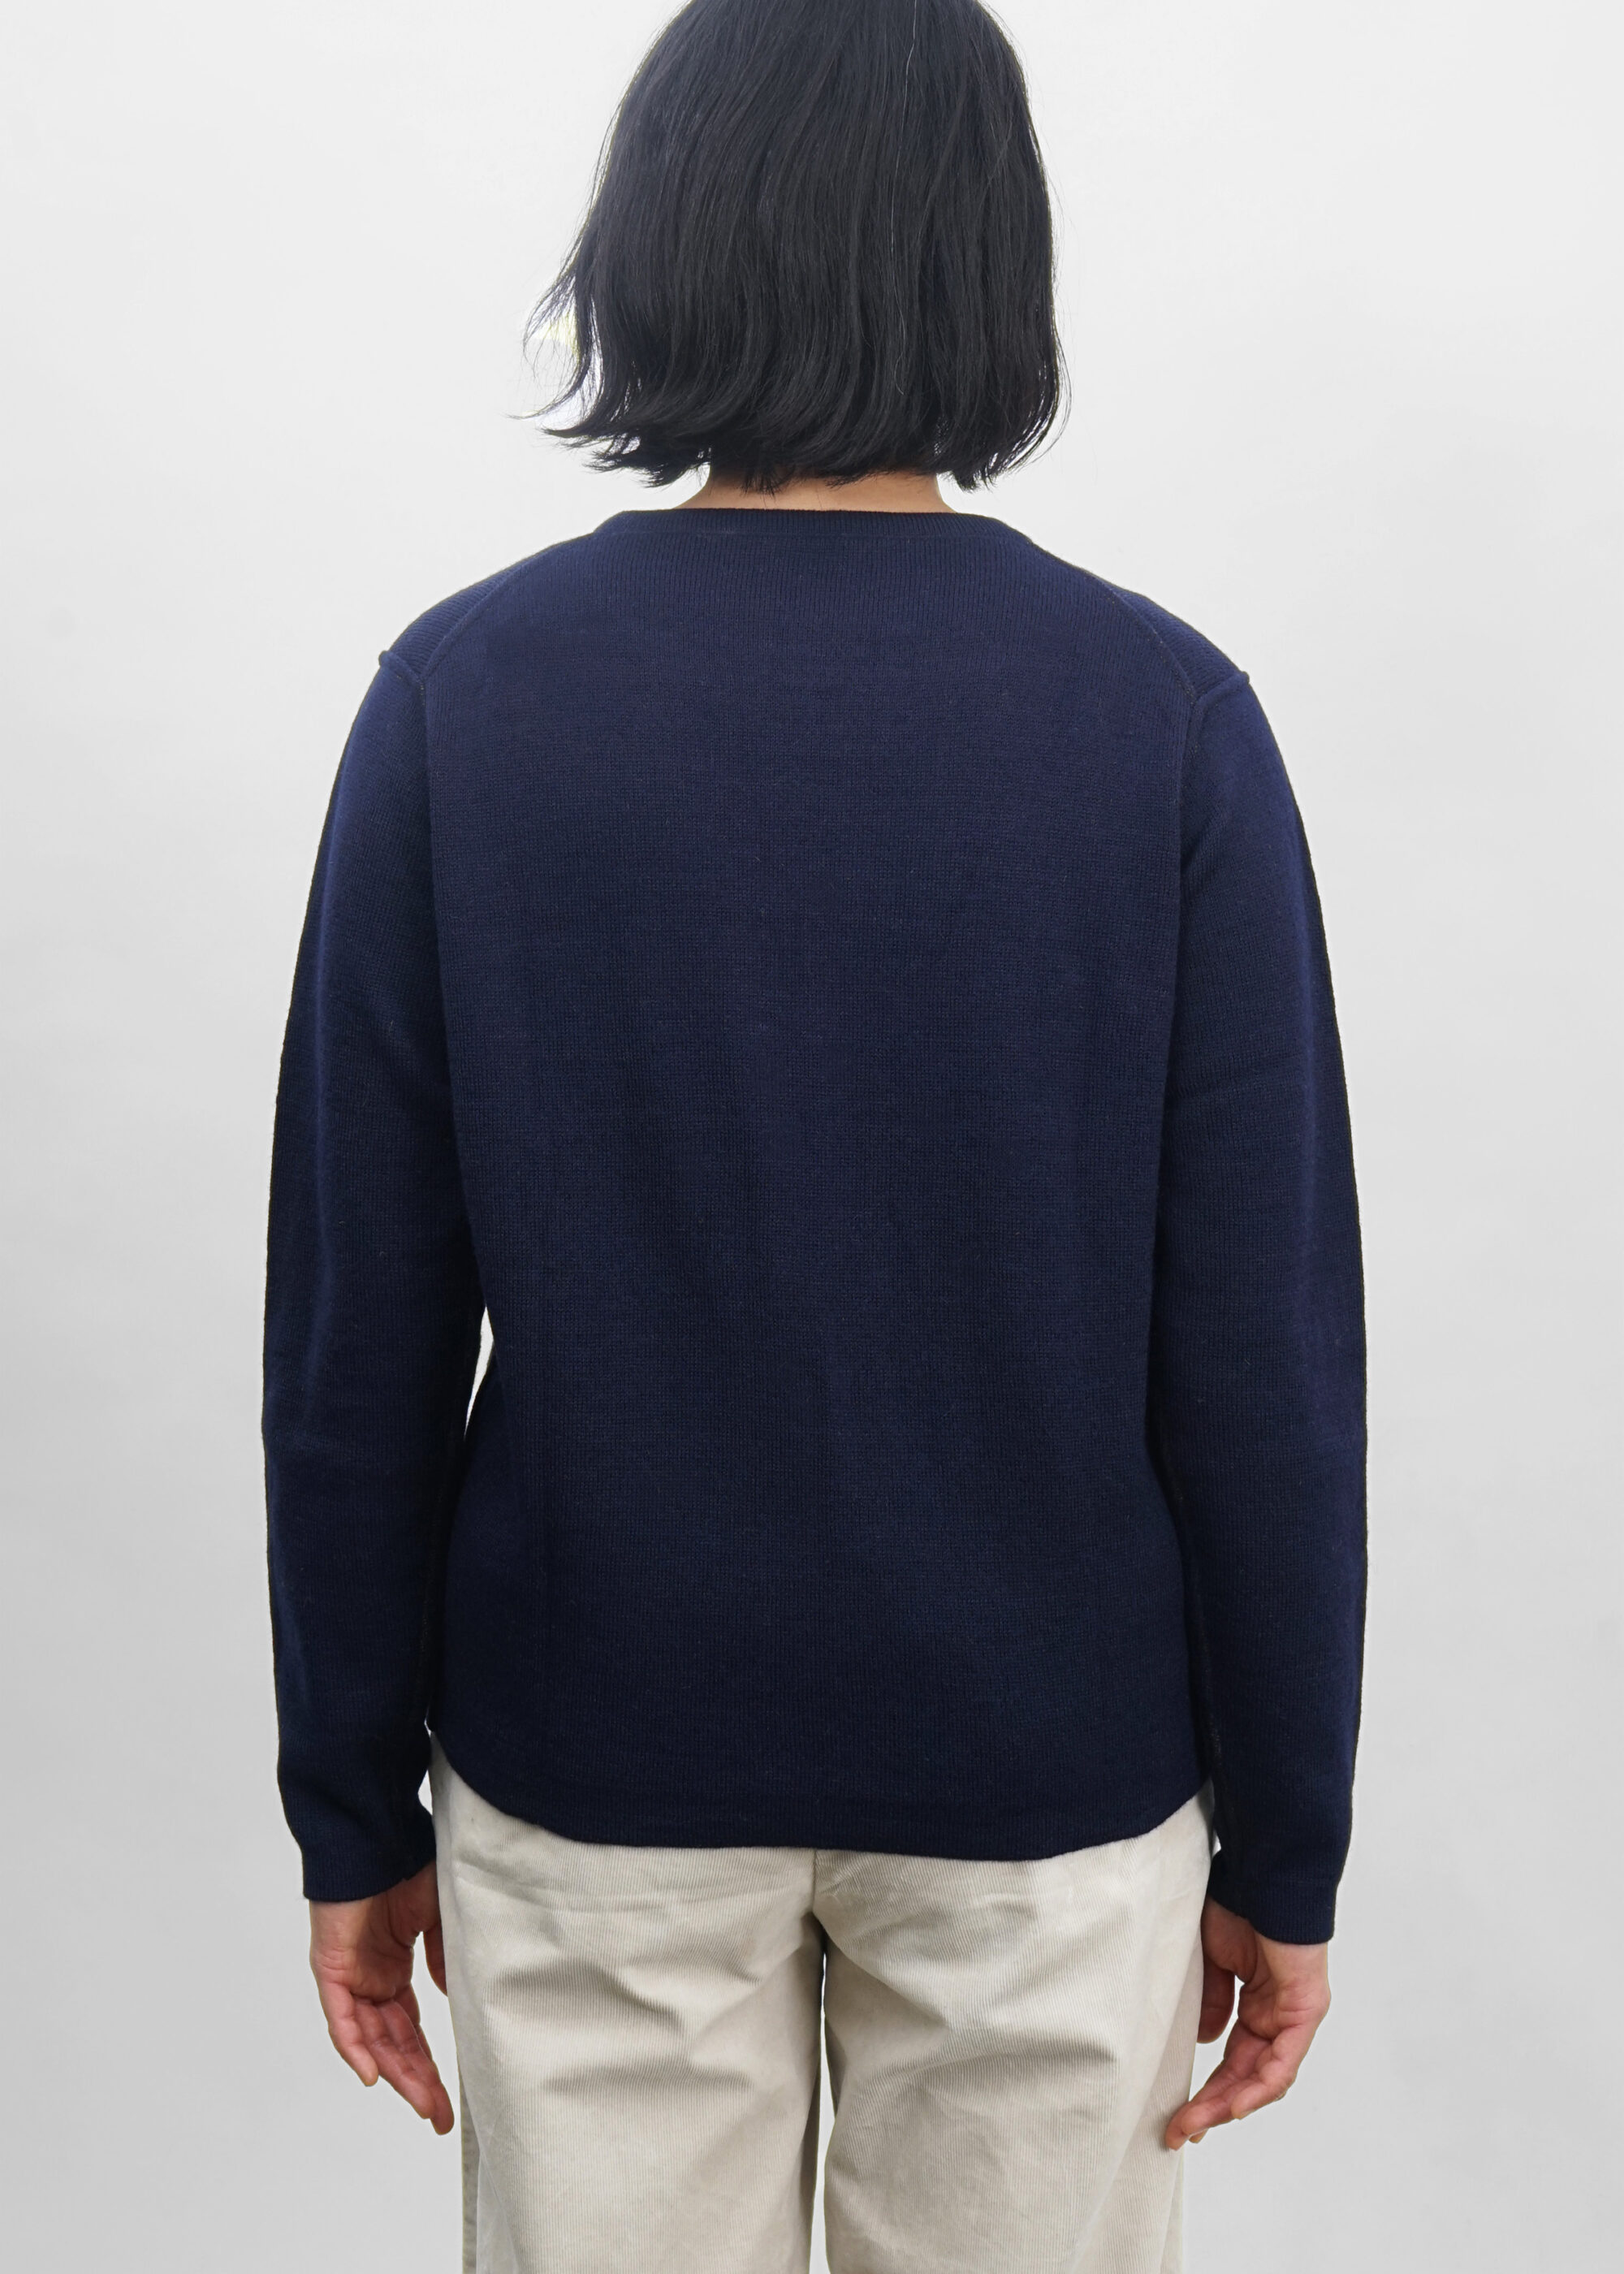 Product image for »Blauaras Mustard« Reversible Sweater Baby Alpaca | Navy Yellow